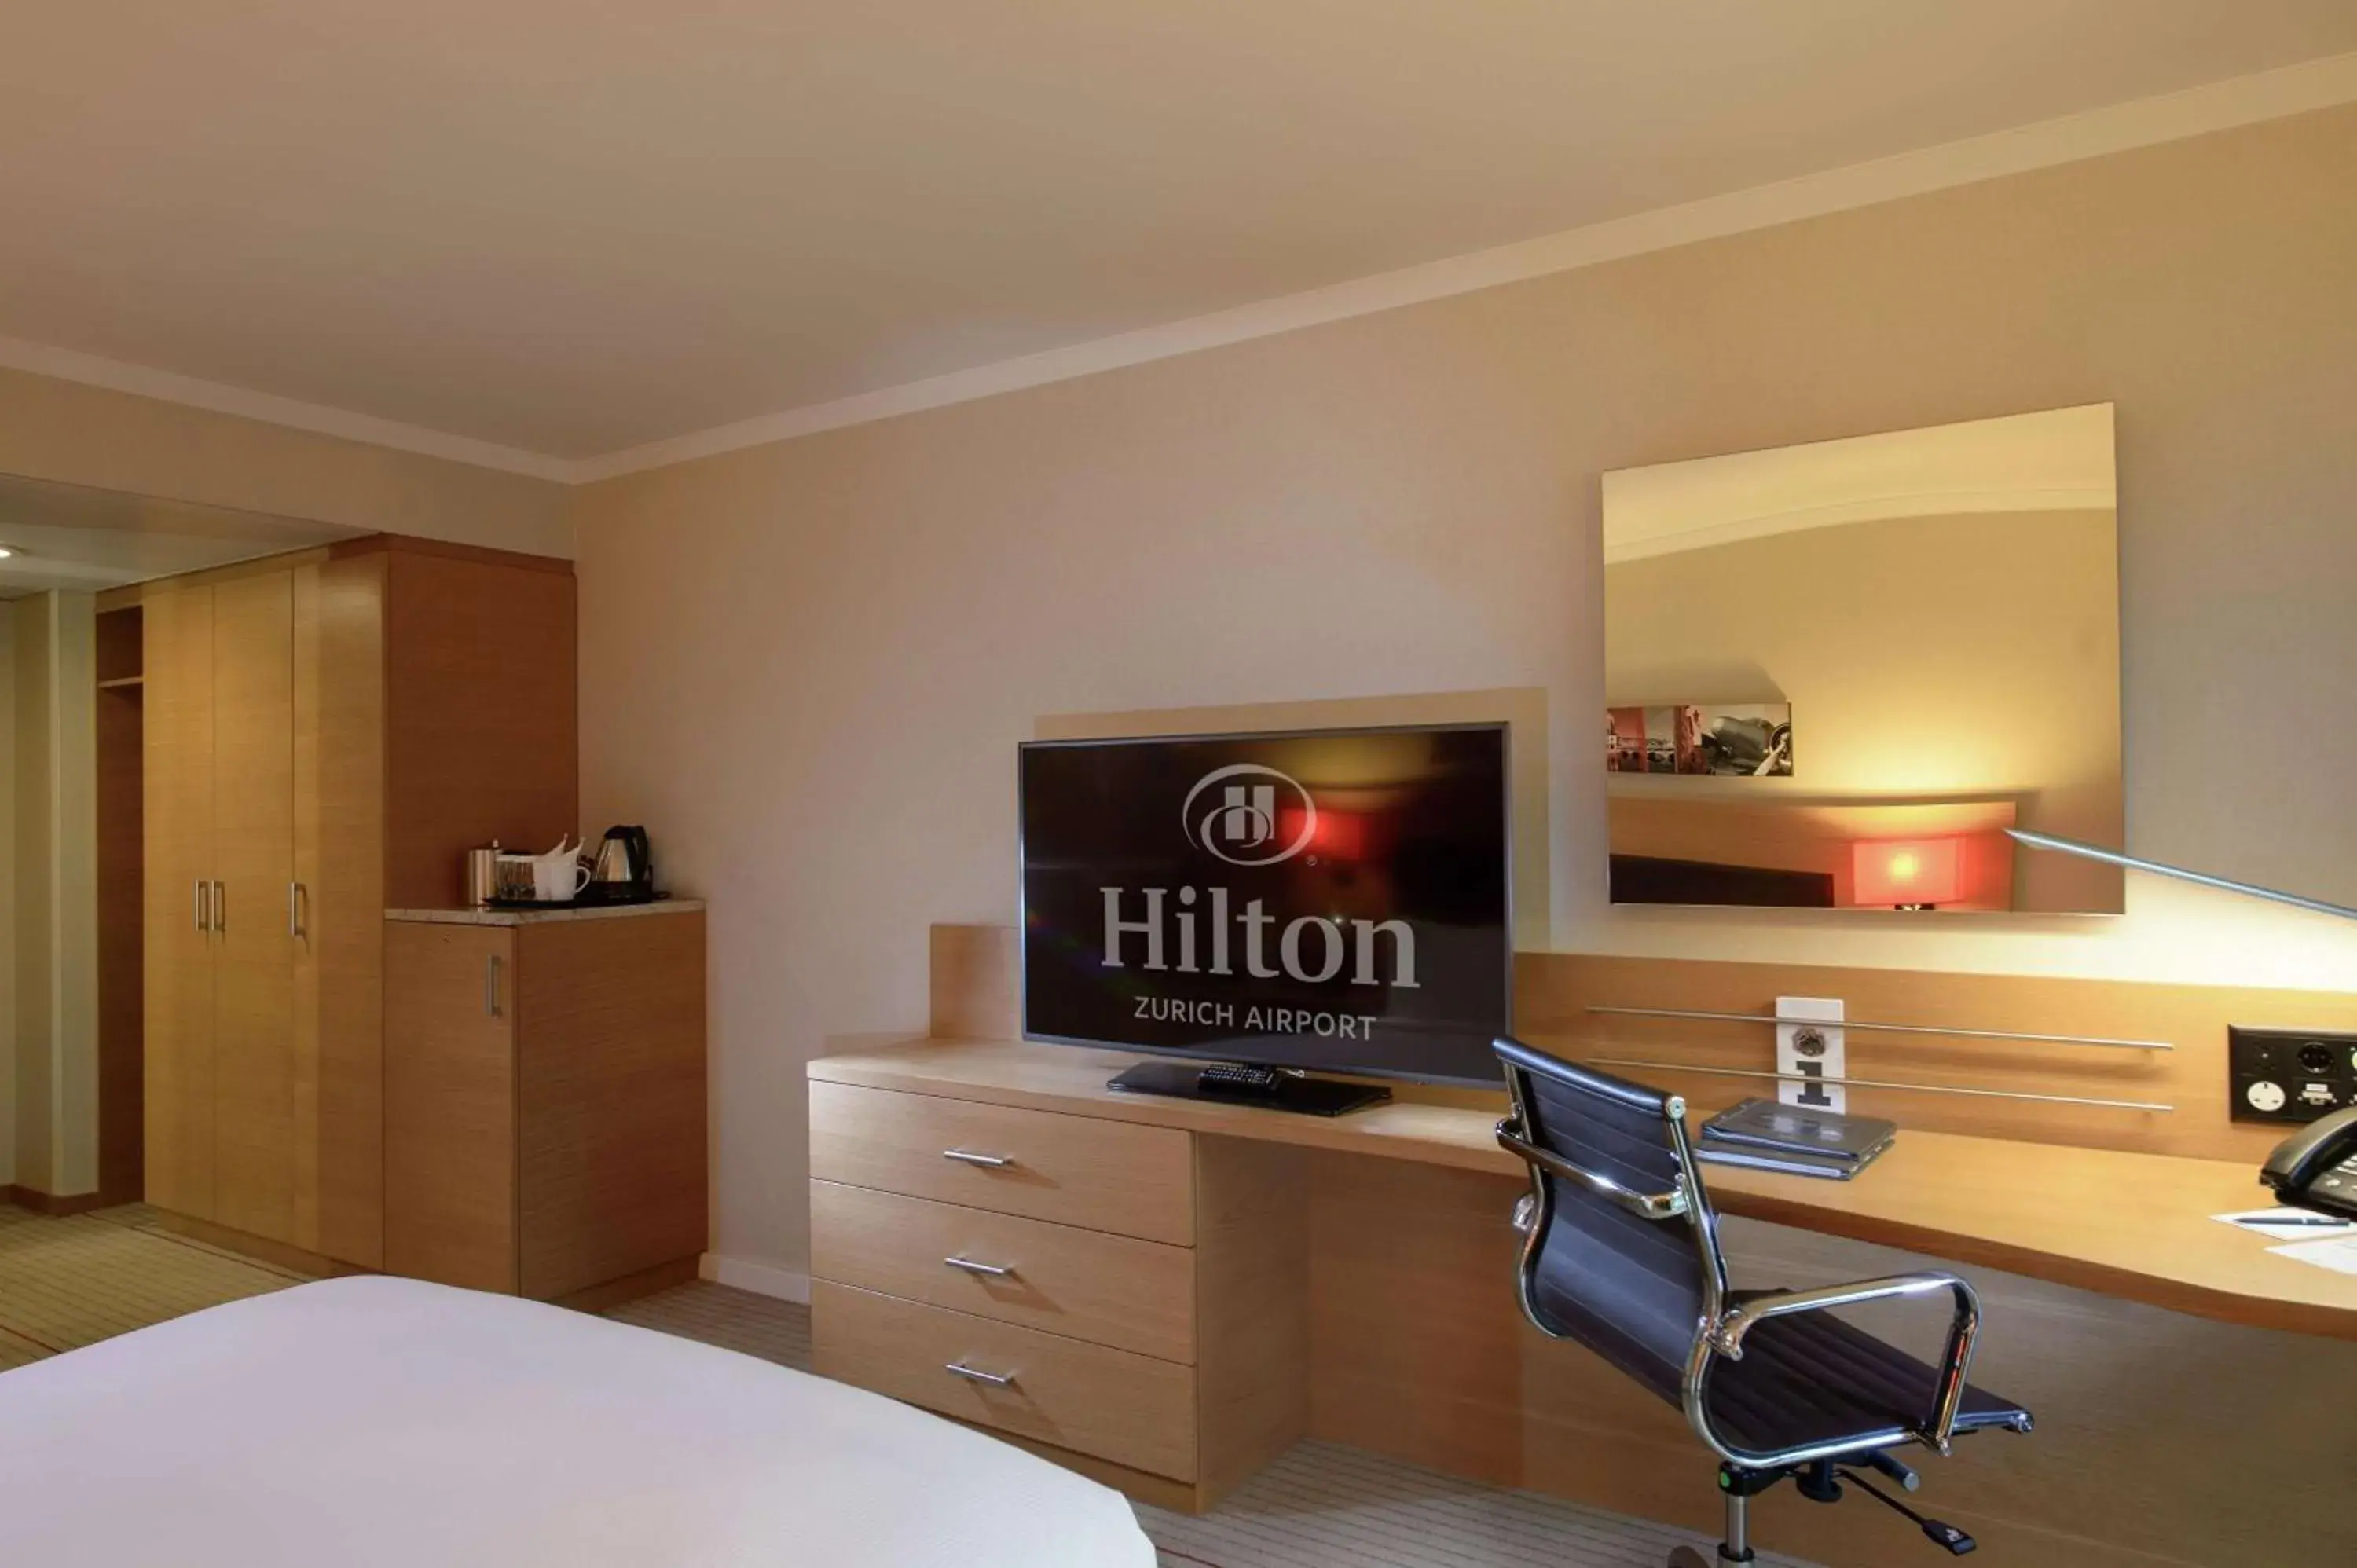 Bedroom, TV/Entertainment Center in Hilton Zurich Airport